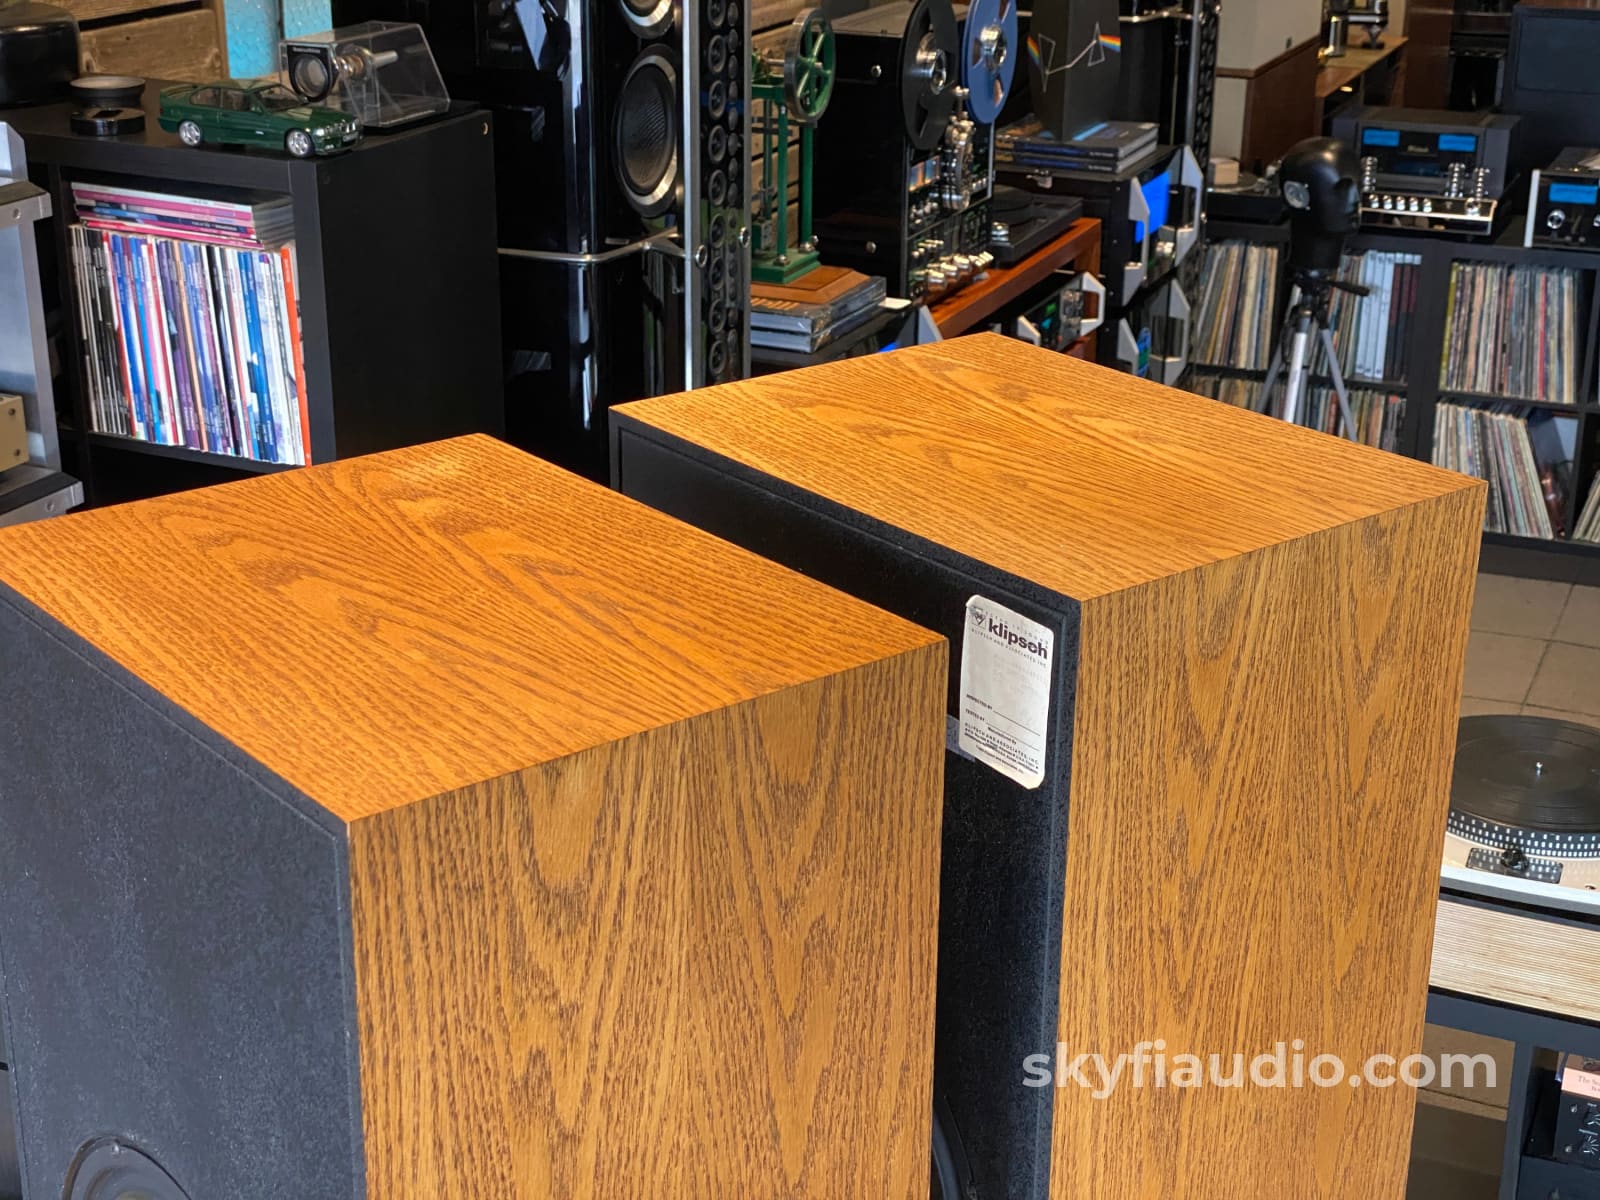 Klipsch Quartet Vintage Floor Standing Speakers - Oak Oil Finish